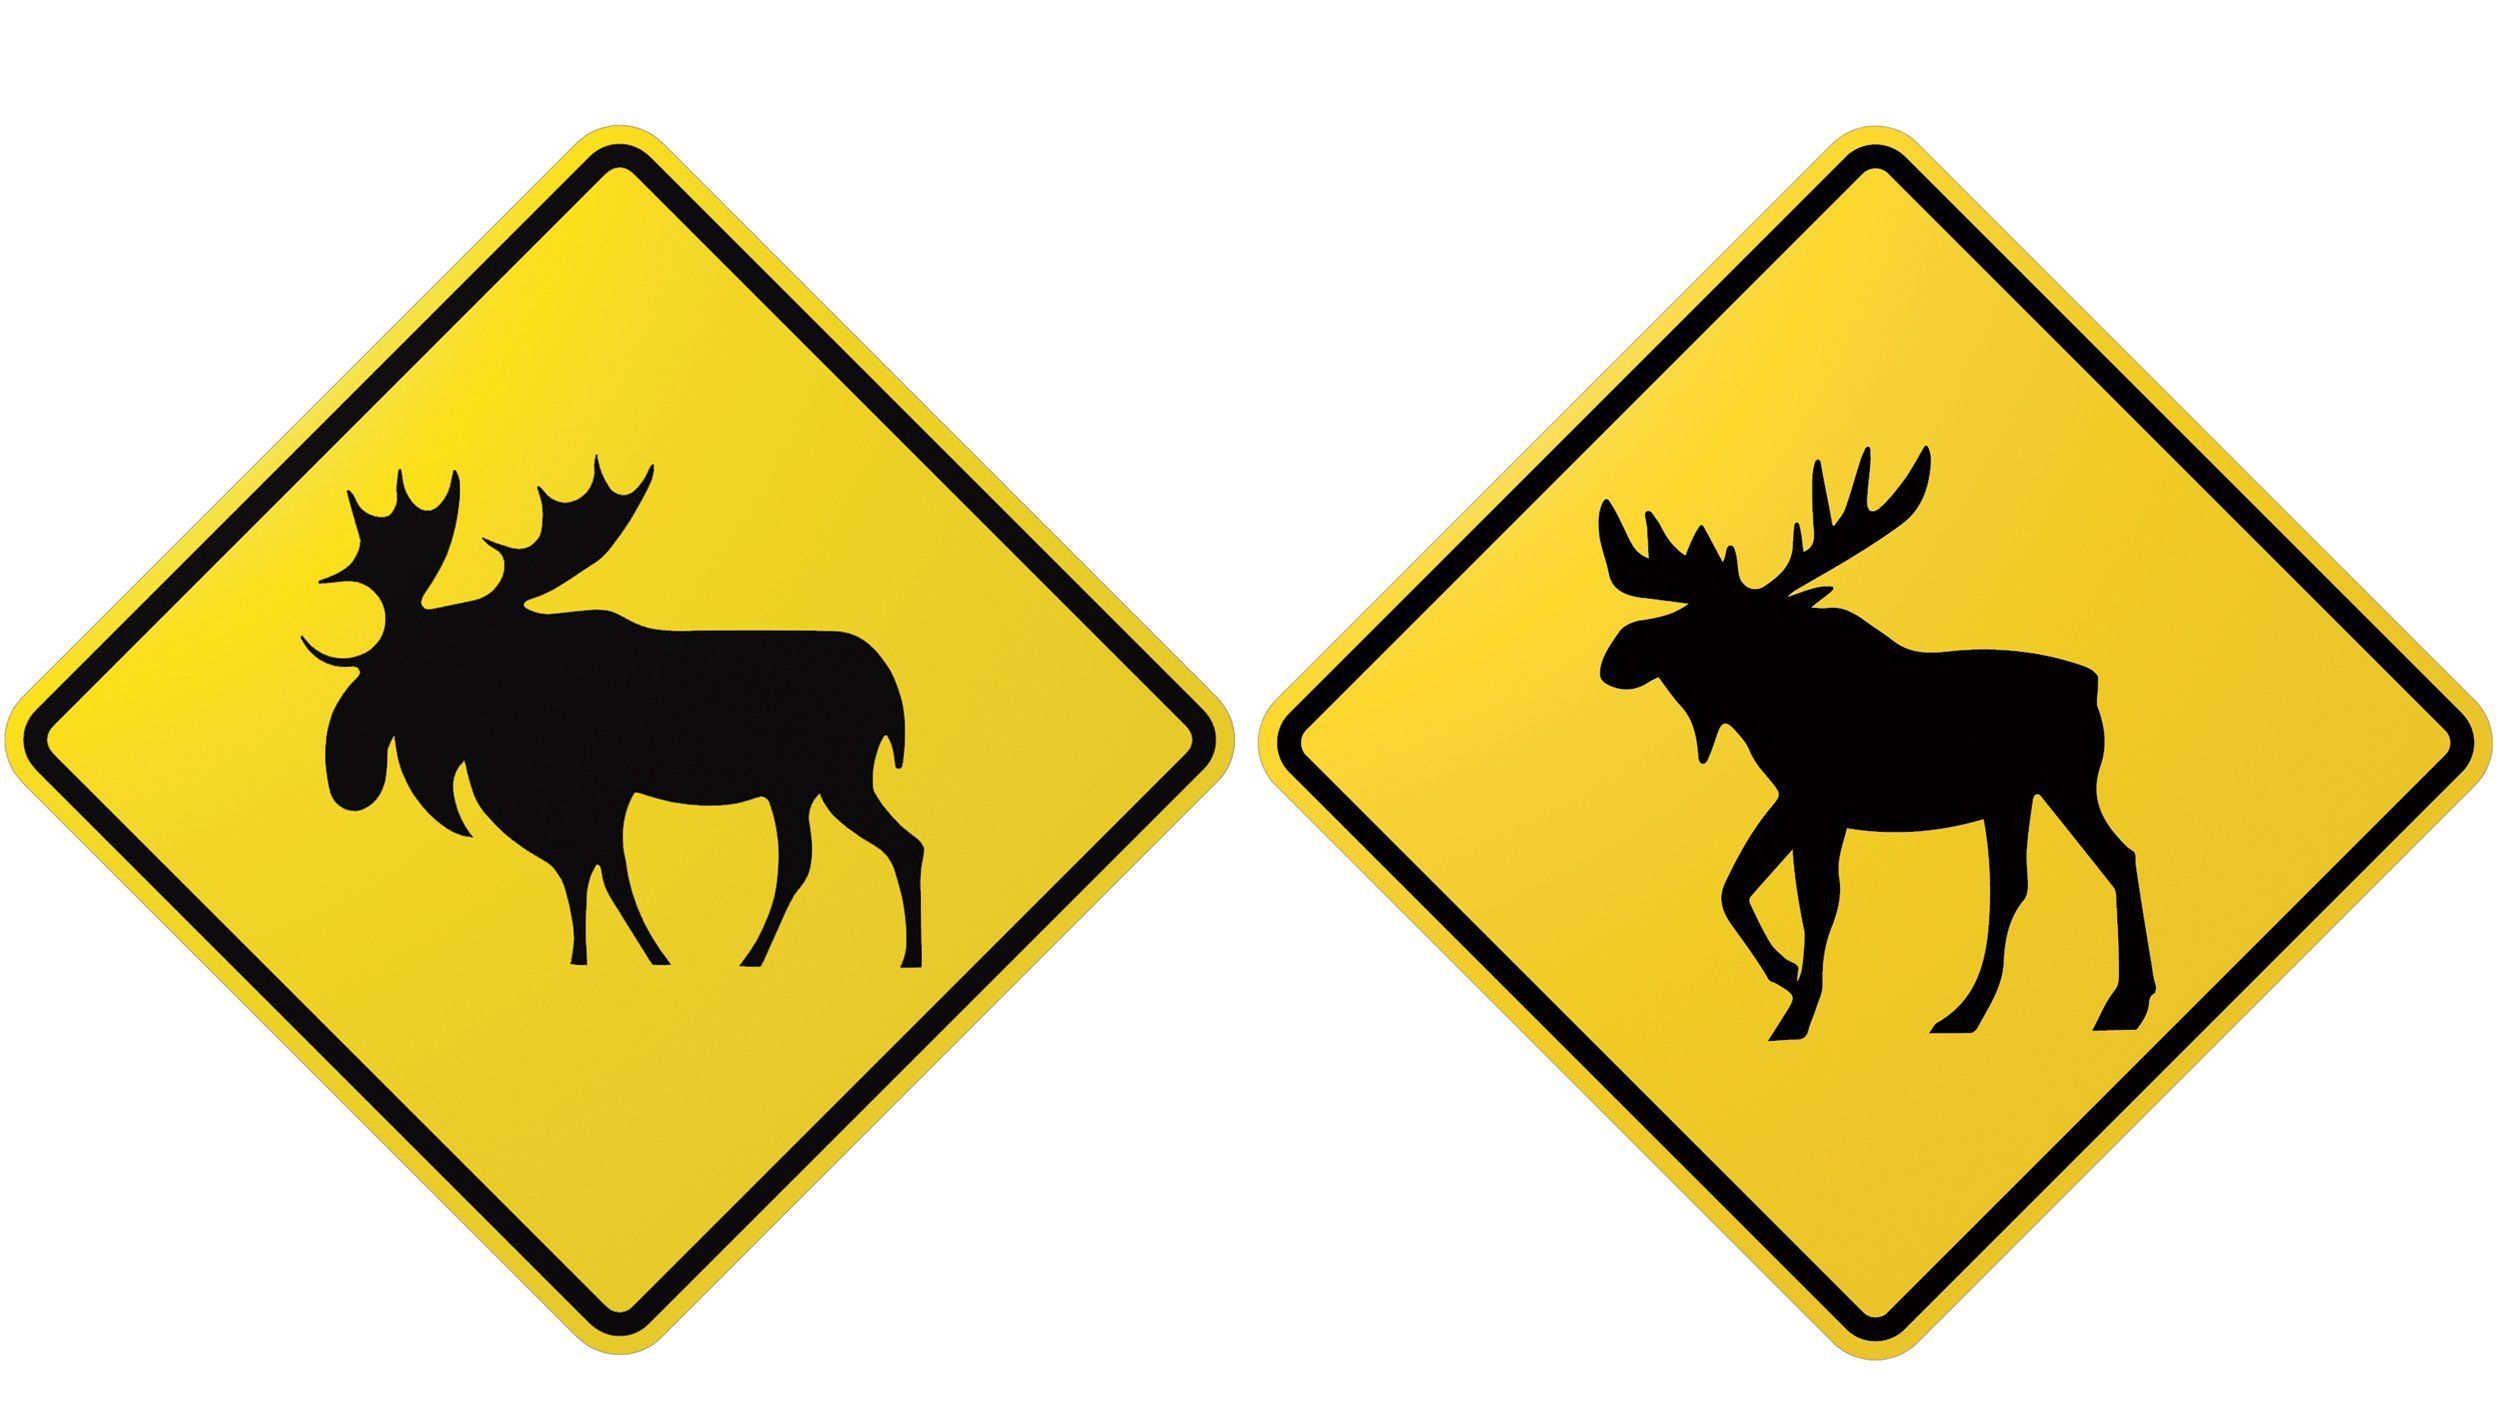 New Moose sign. (Courtesy of Transportation Association of Canada)